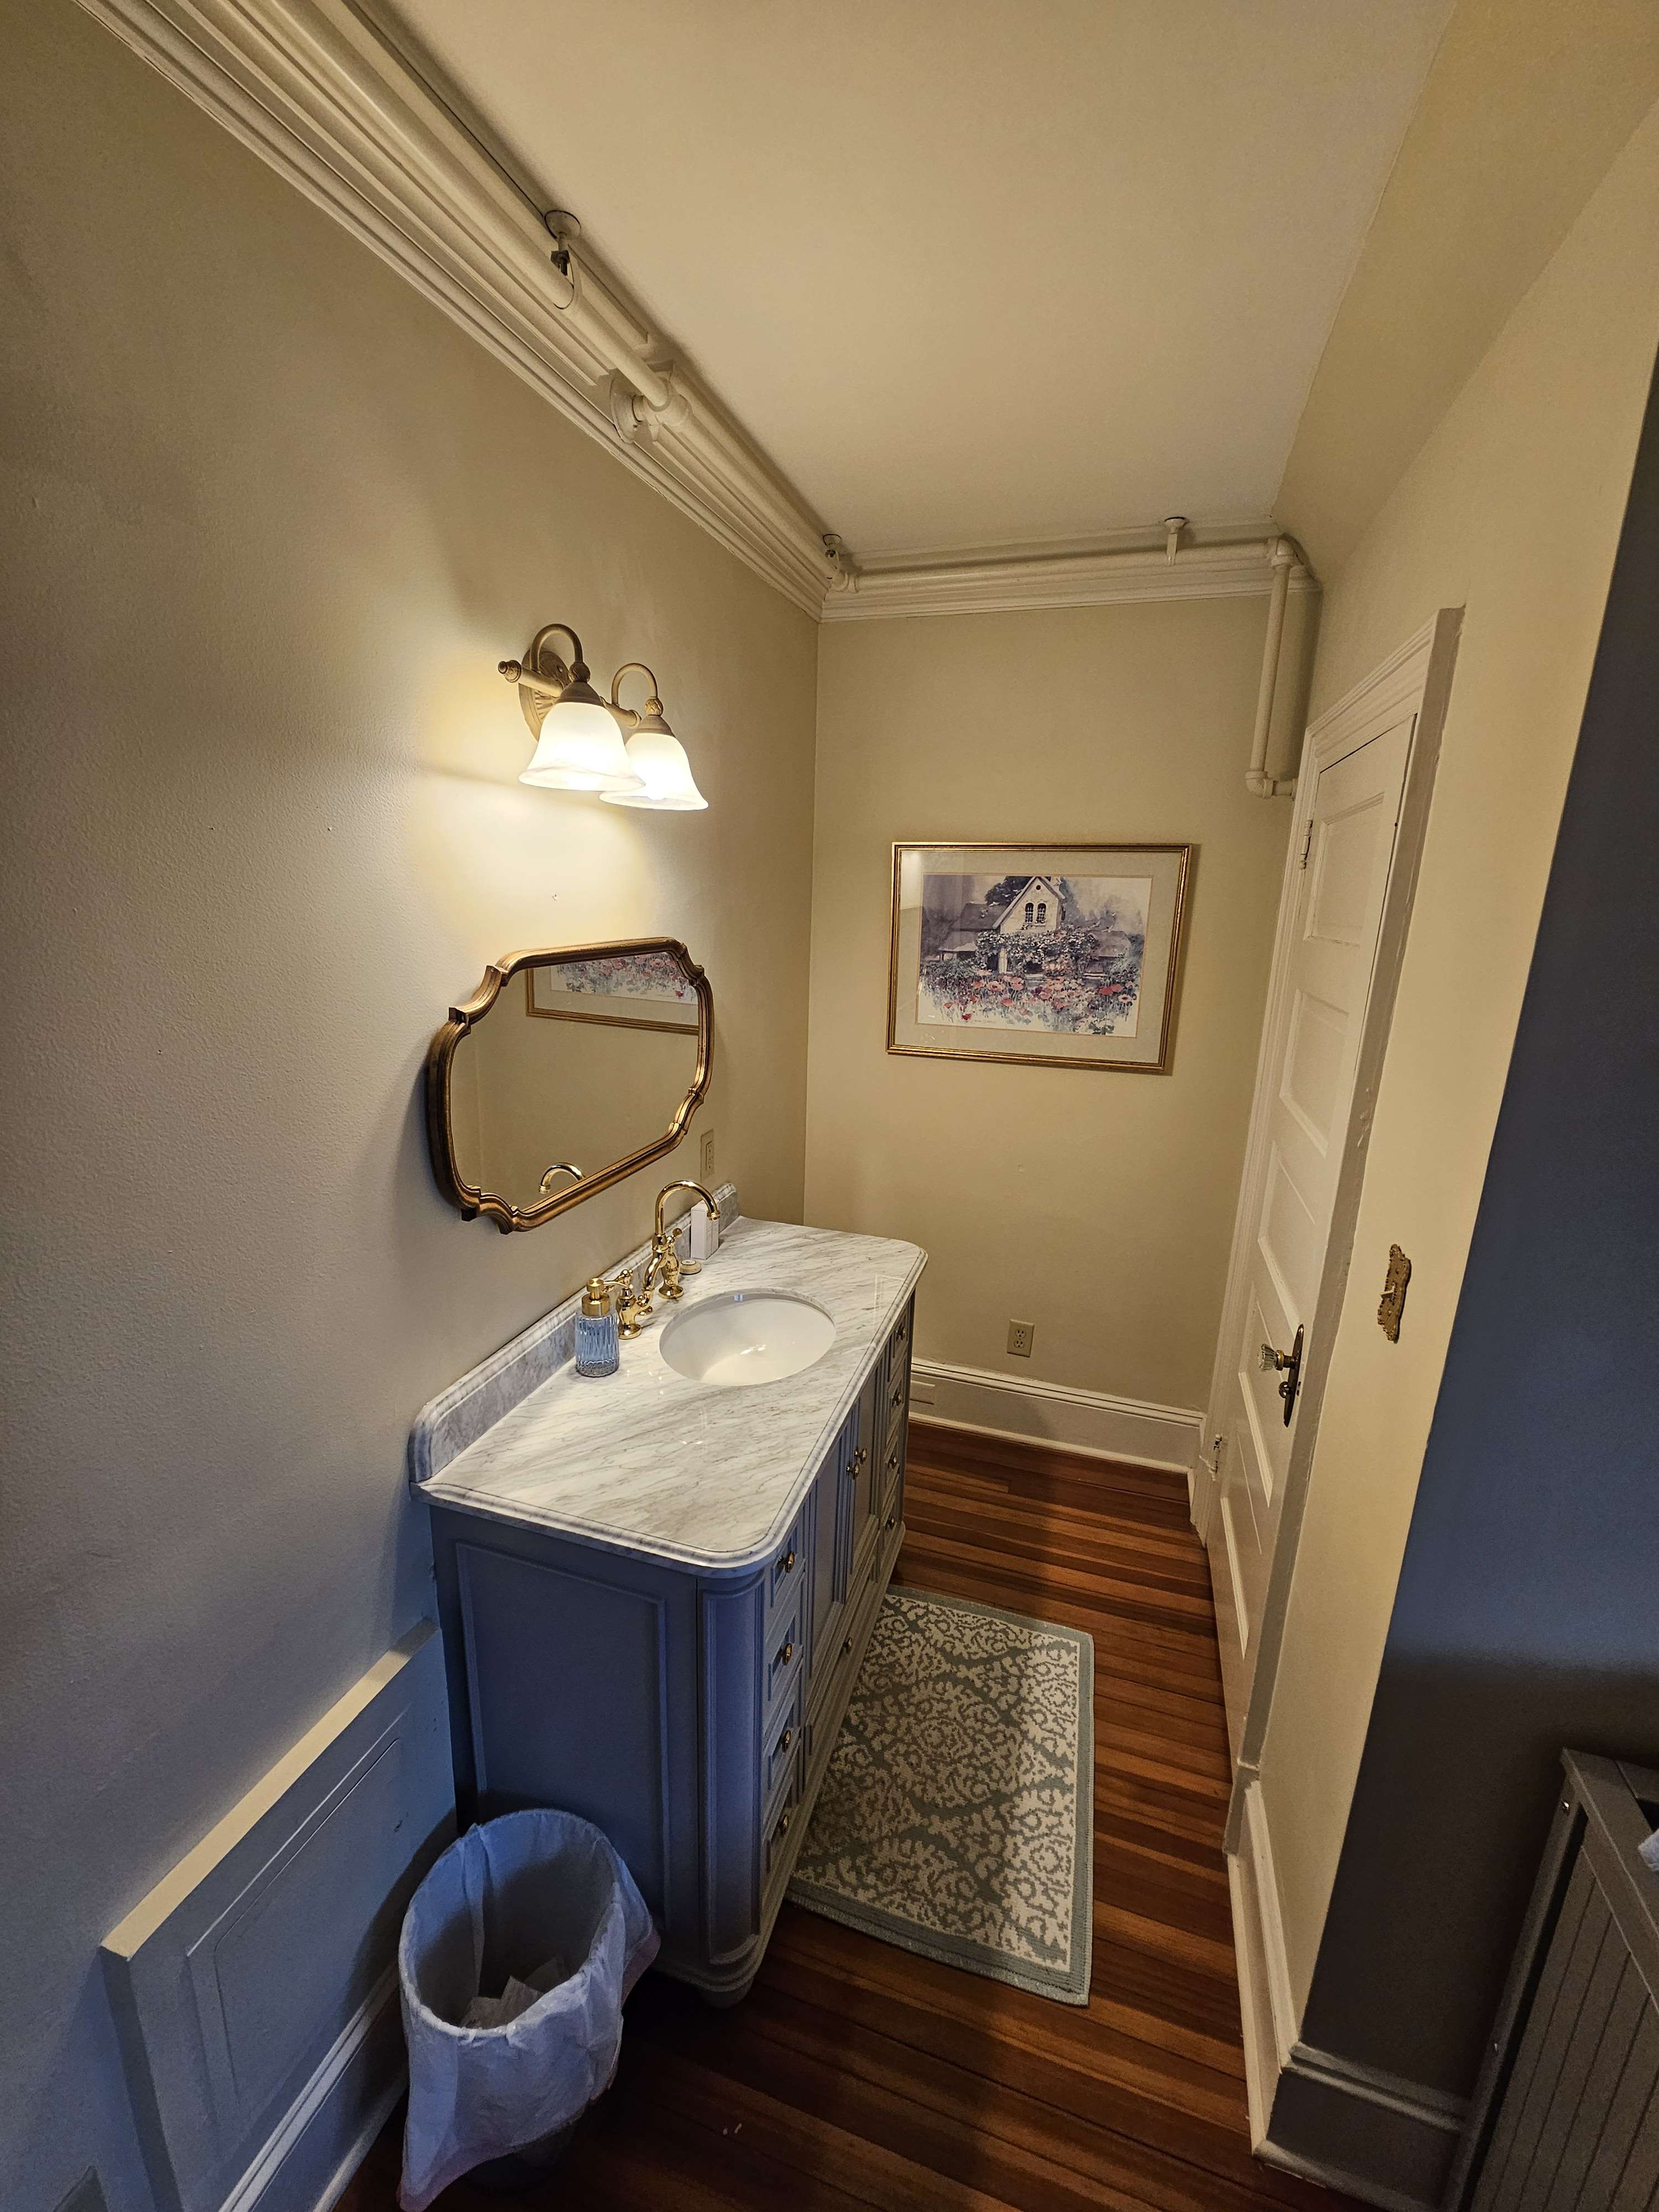 Sink area with wooden vanity in room